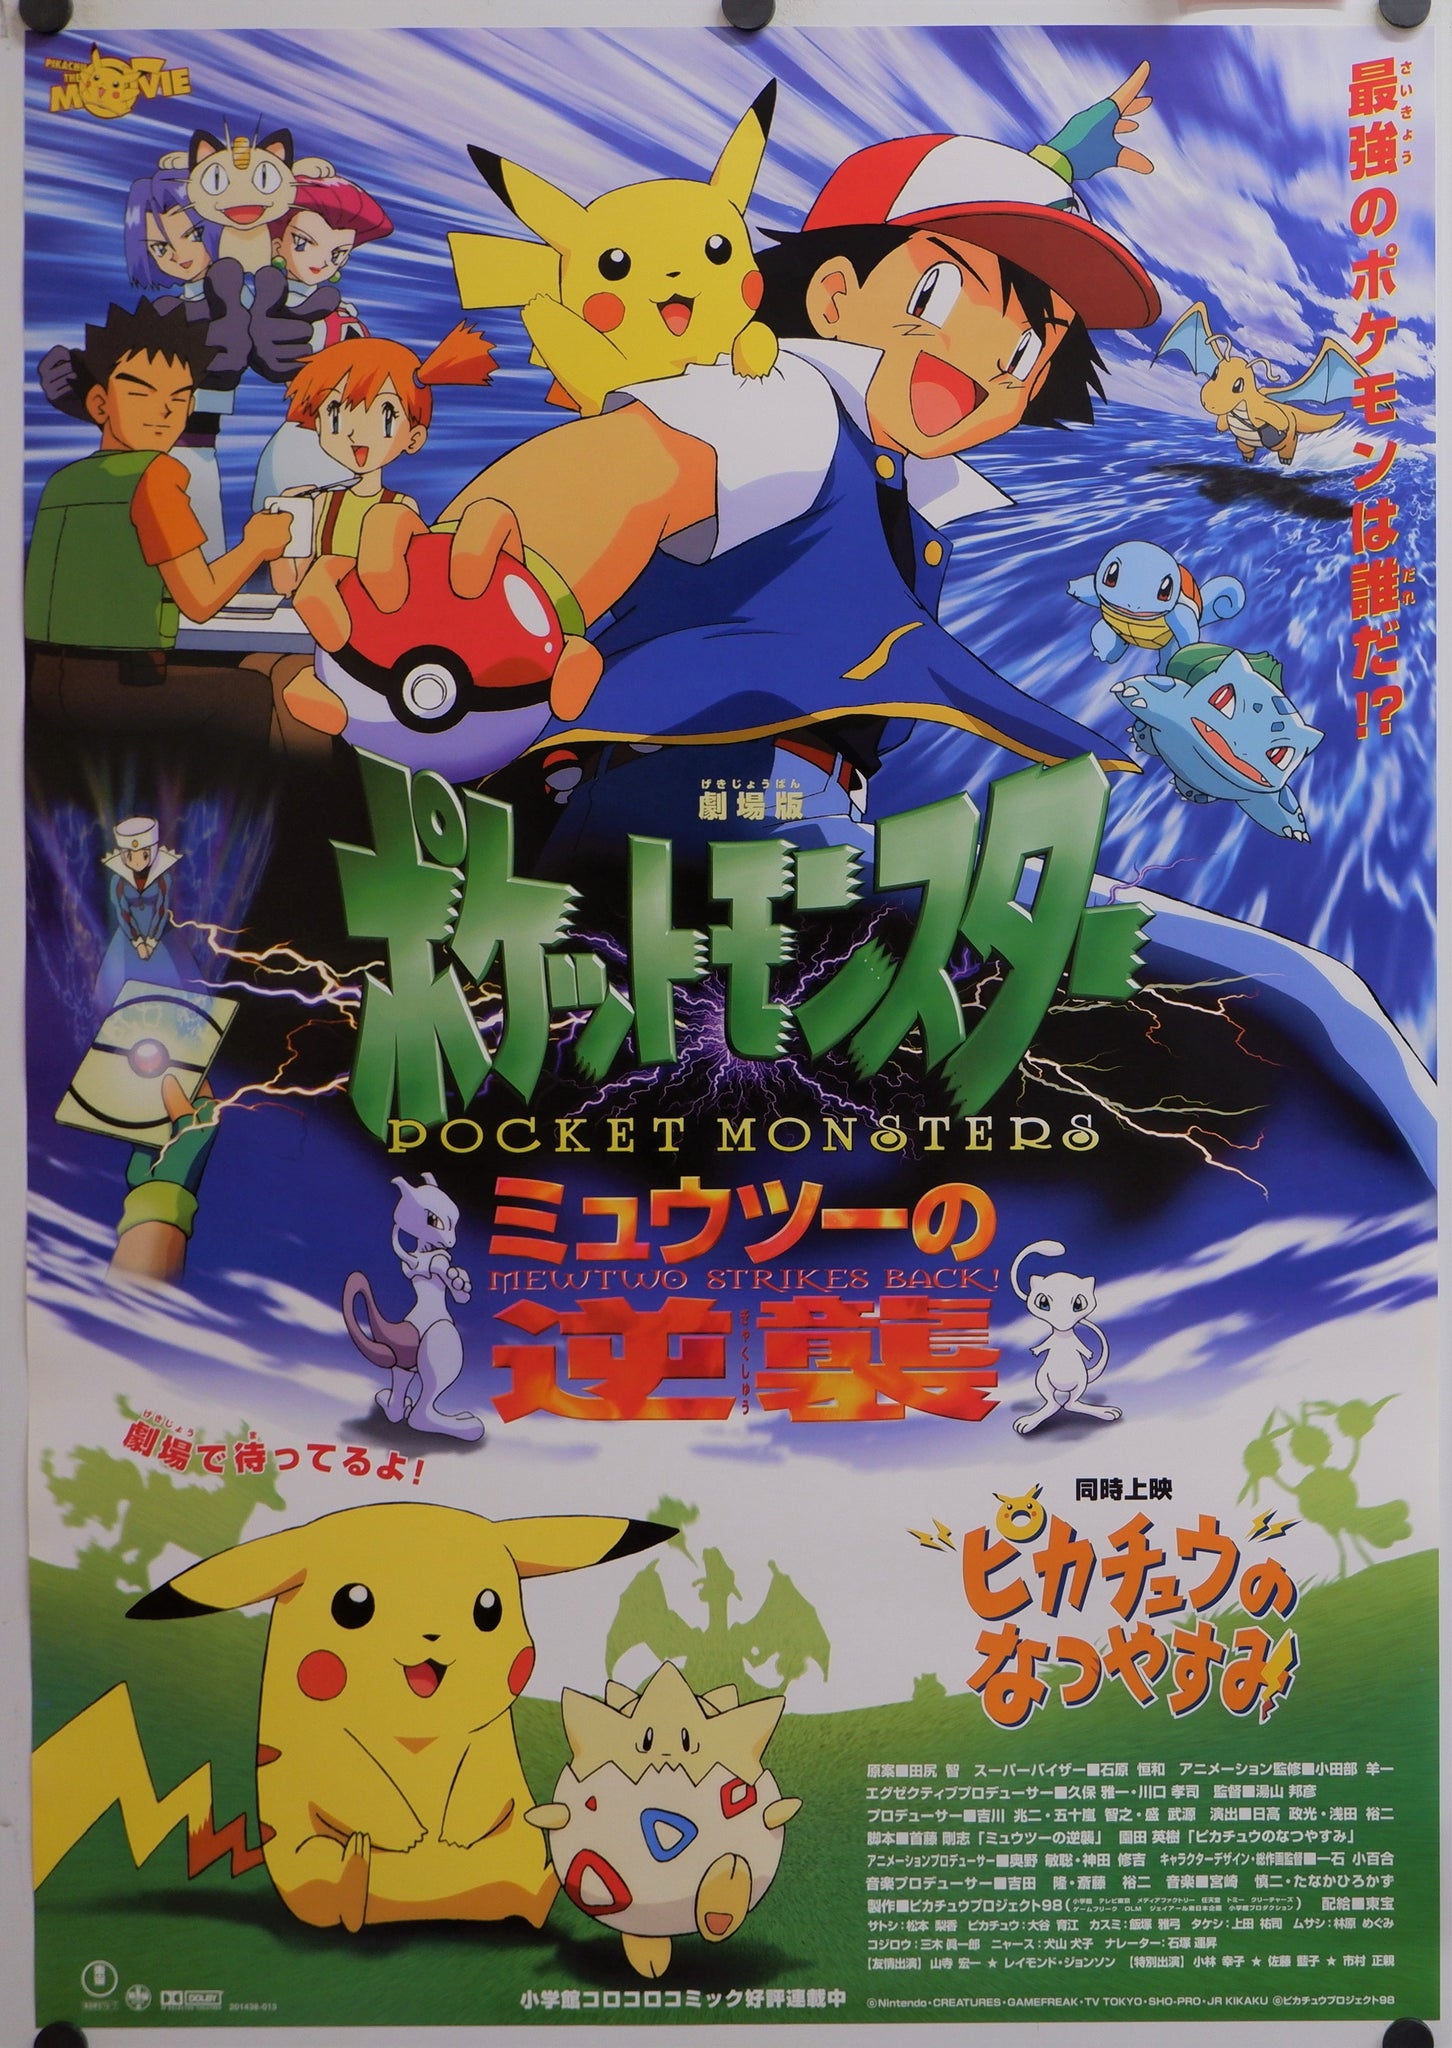 RARE Original Vintage 1995 Pokemon Cartoon TV Show Poster -  UK